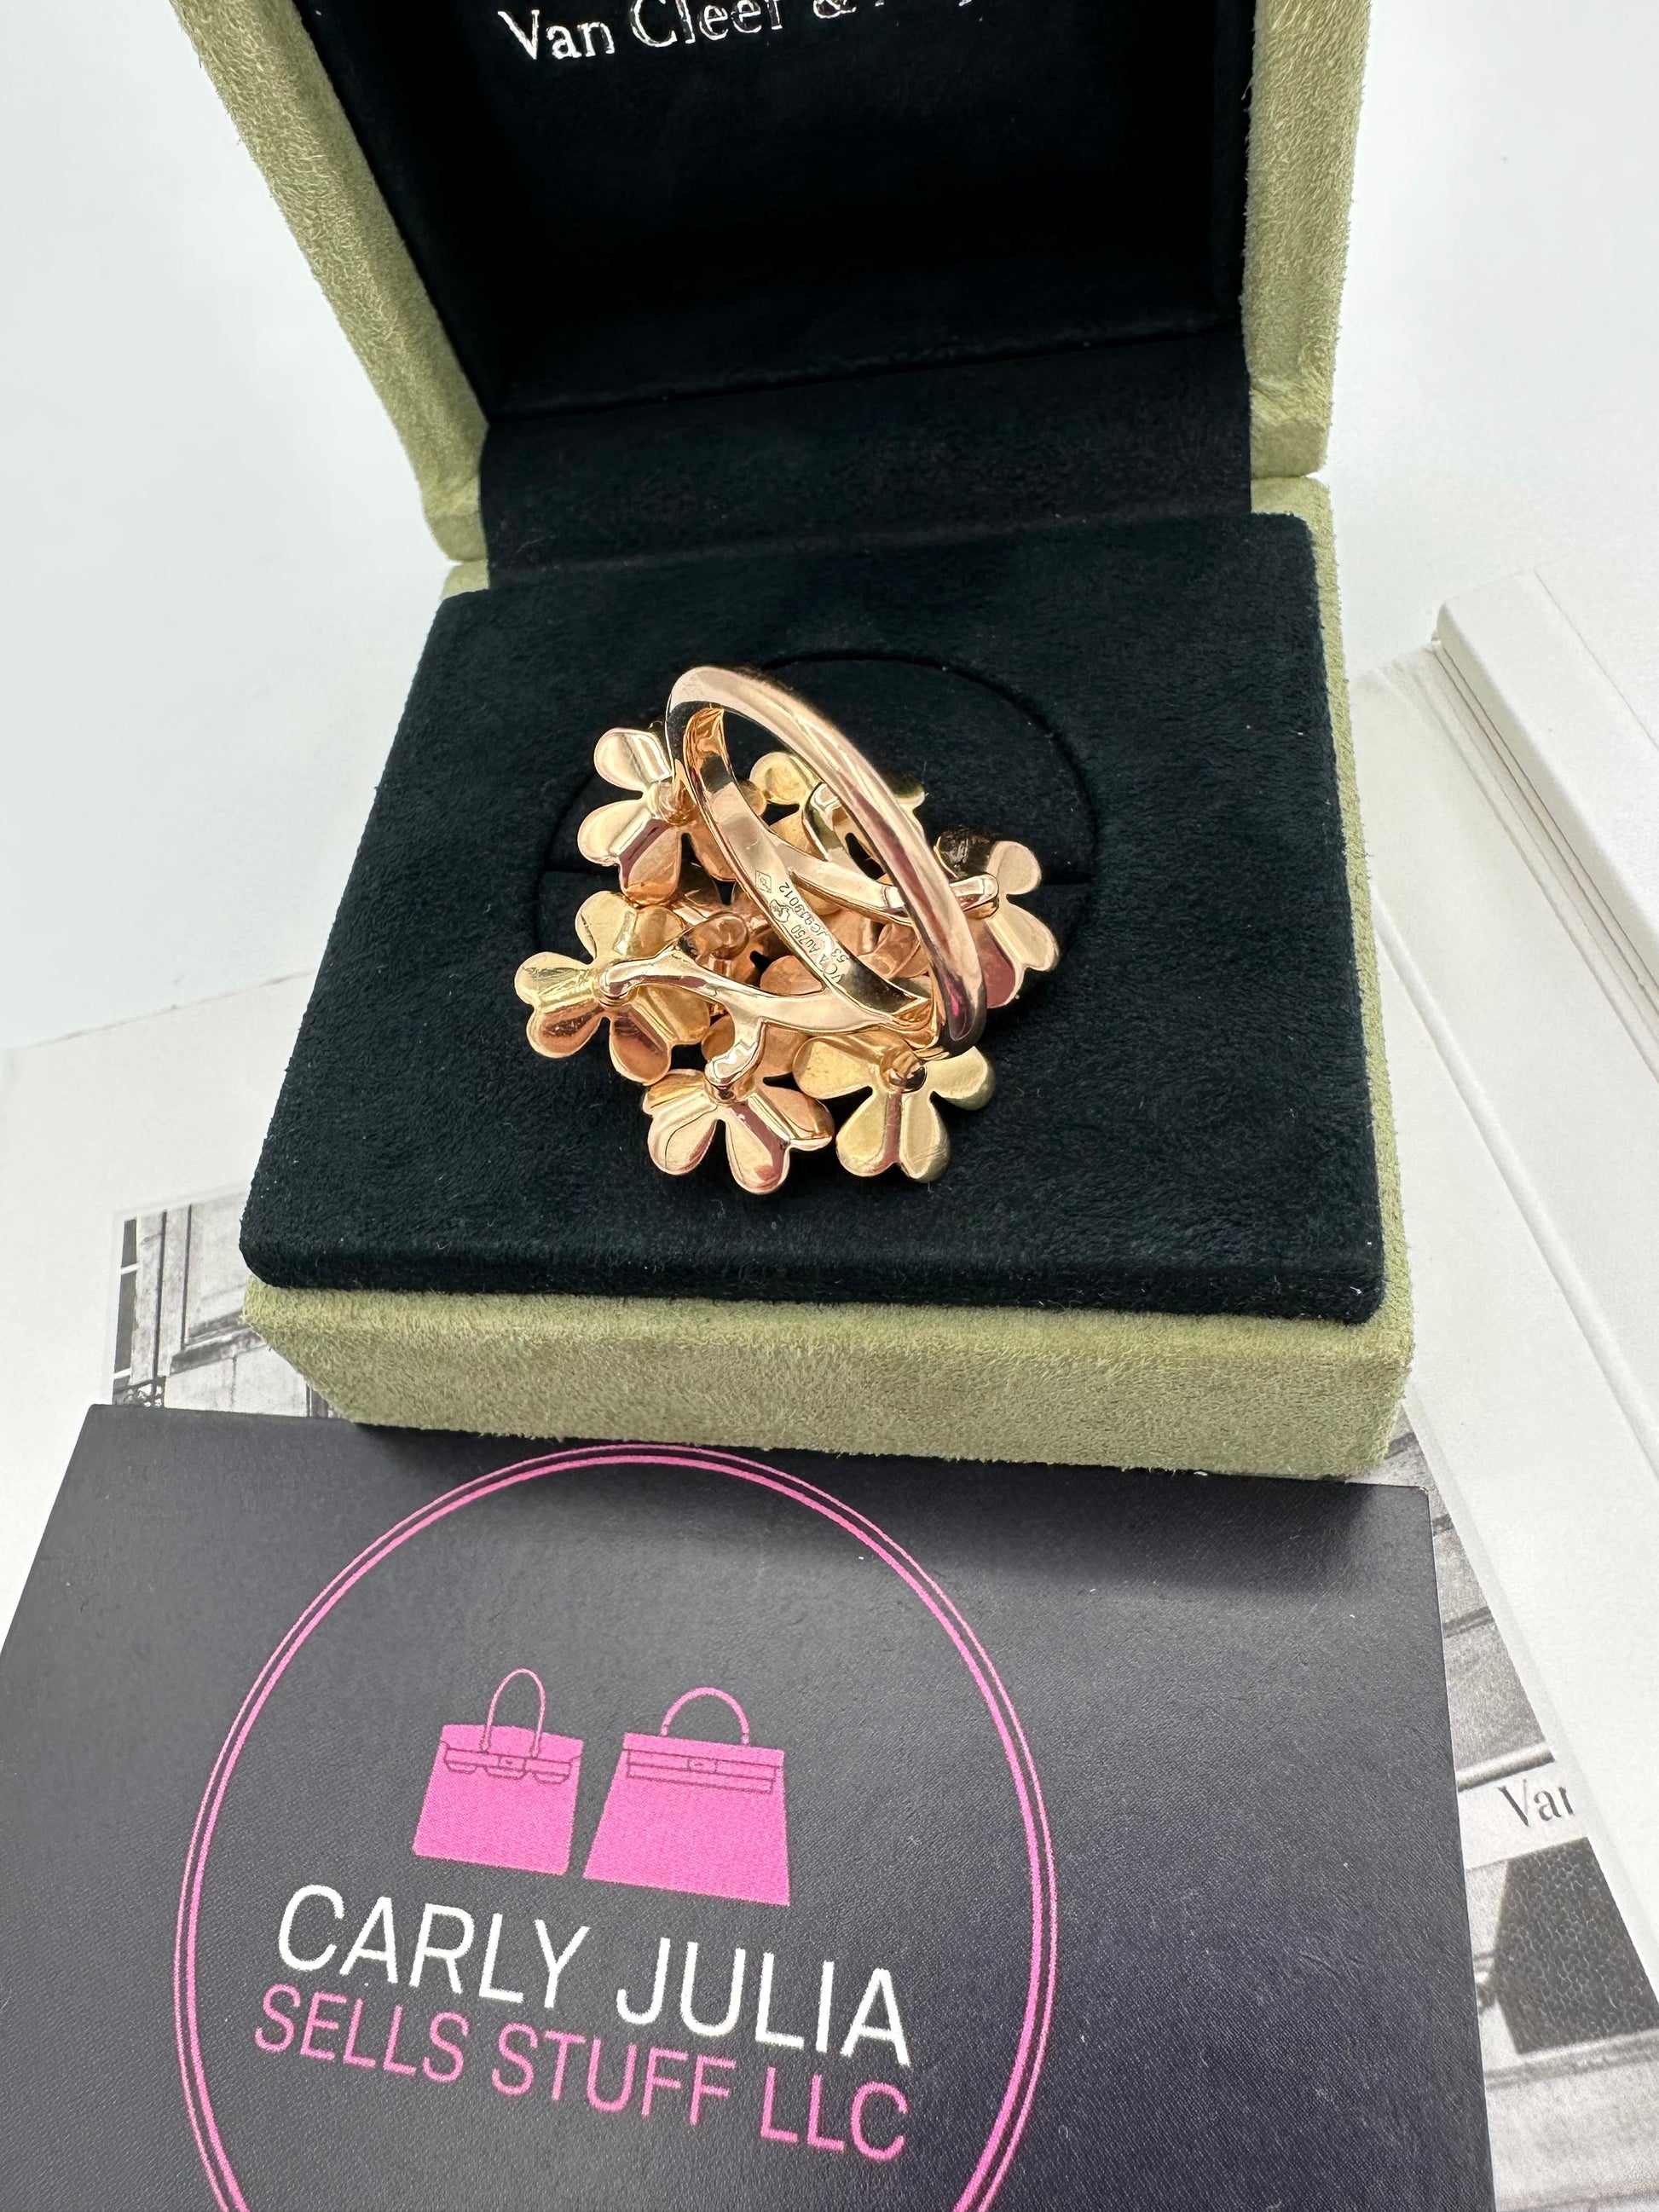 Van Cleef & Arpels 8 Flower Frivole Ring - Carly Julia Sells Stuff, LLC